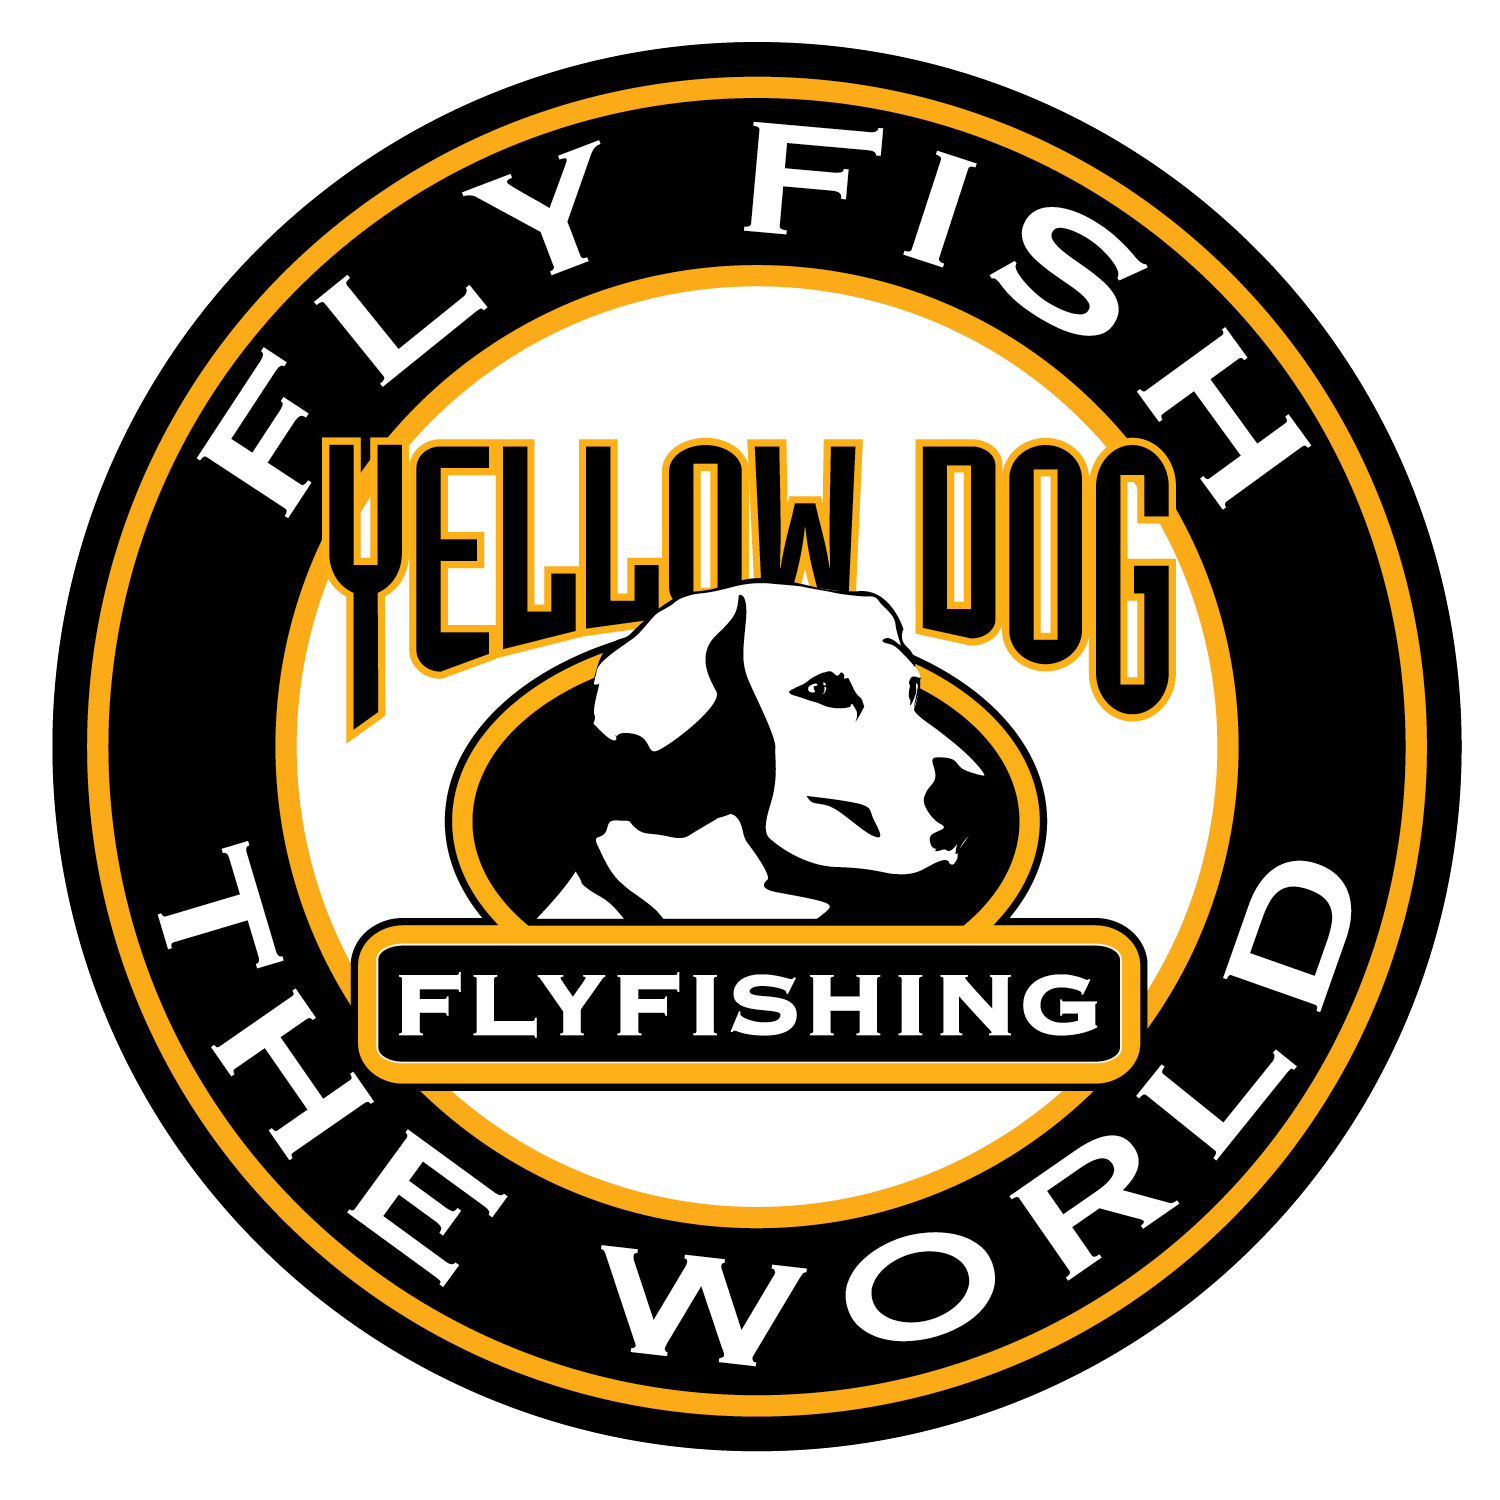 www.yellowdogflyfishing.com